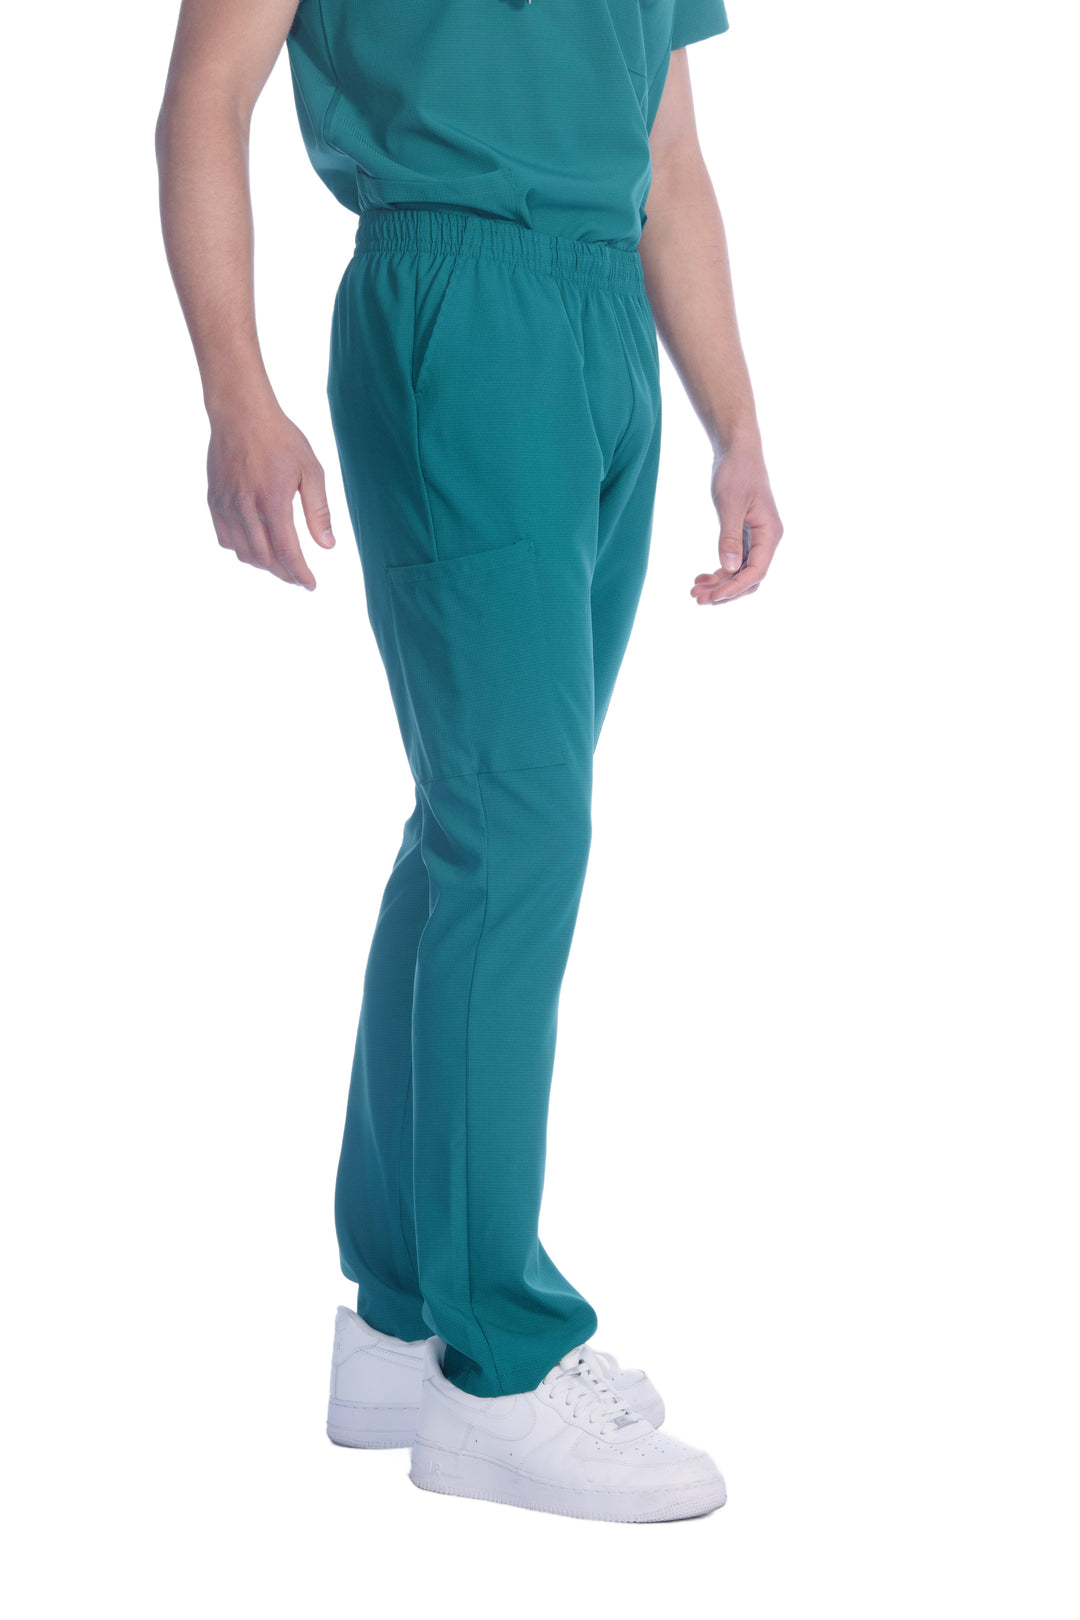 Greentown 4 Flex Unisex Pants Style 2201 - Where Comfort Meets Professionalism